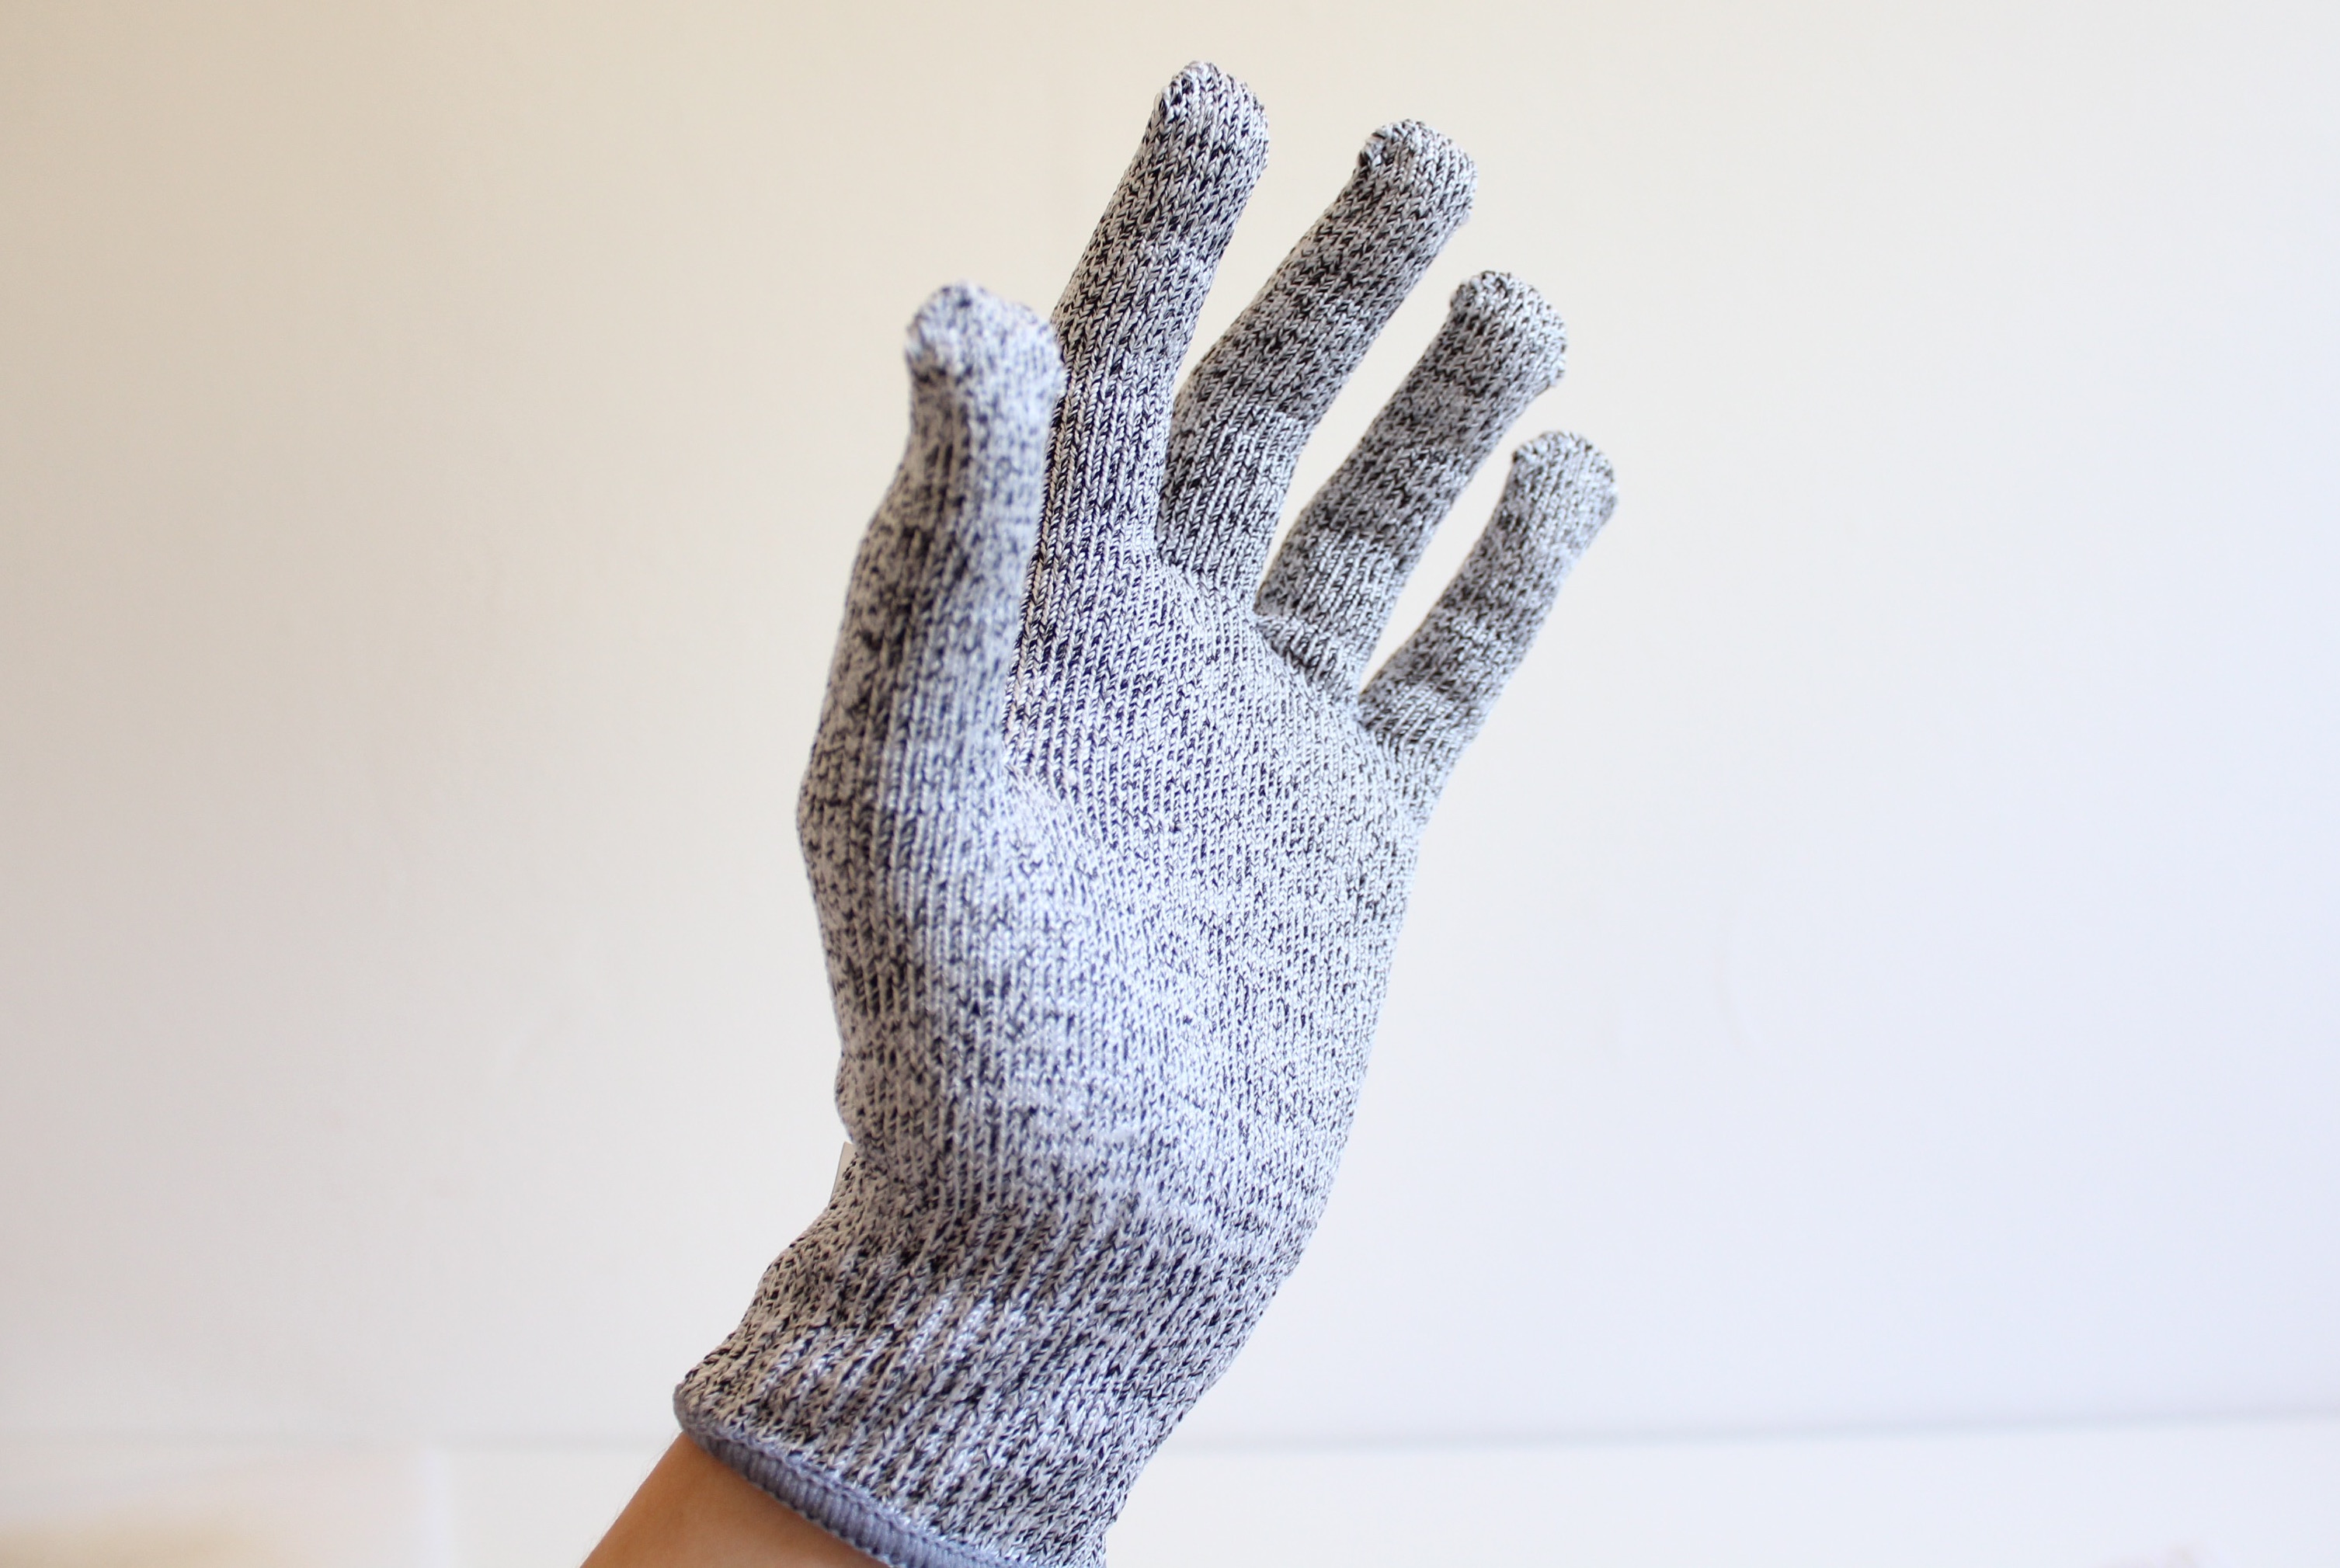 NoCry Cut Resistant Gloves